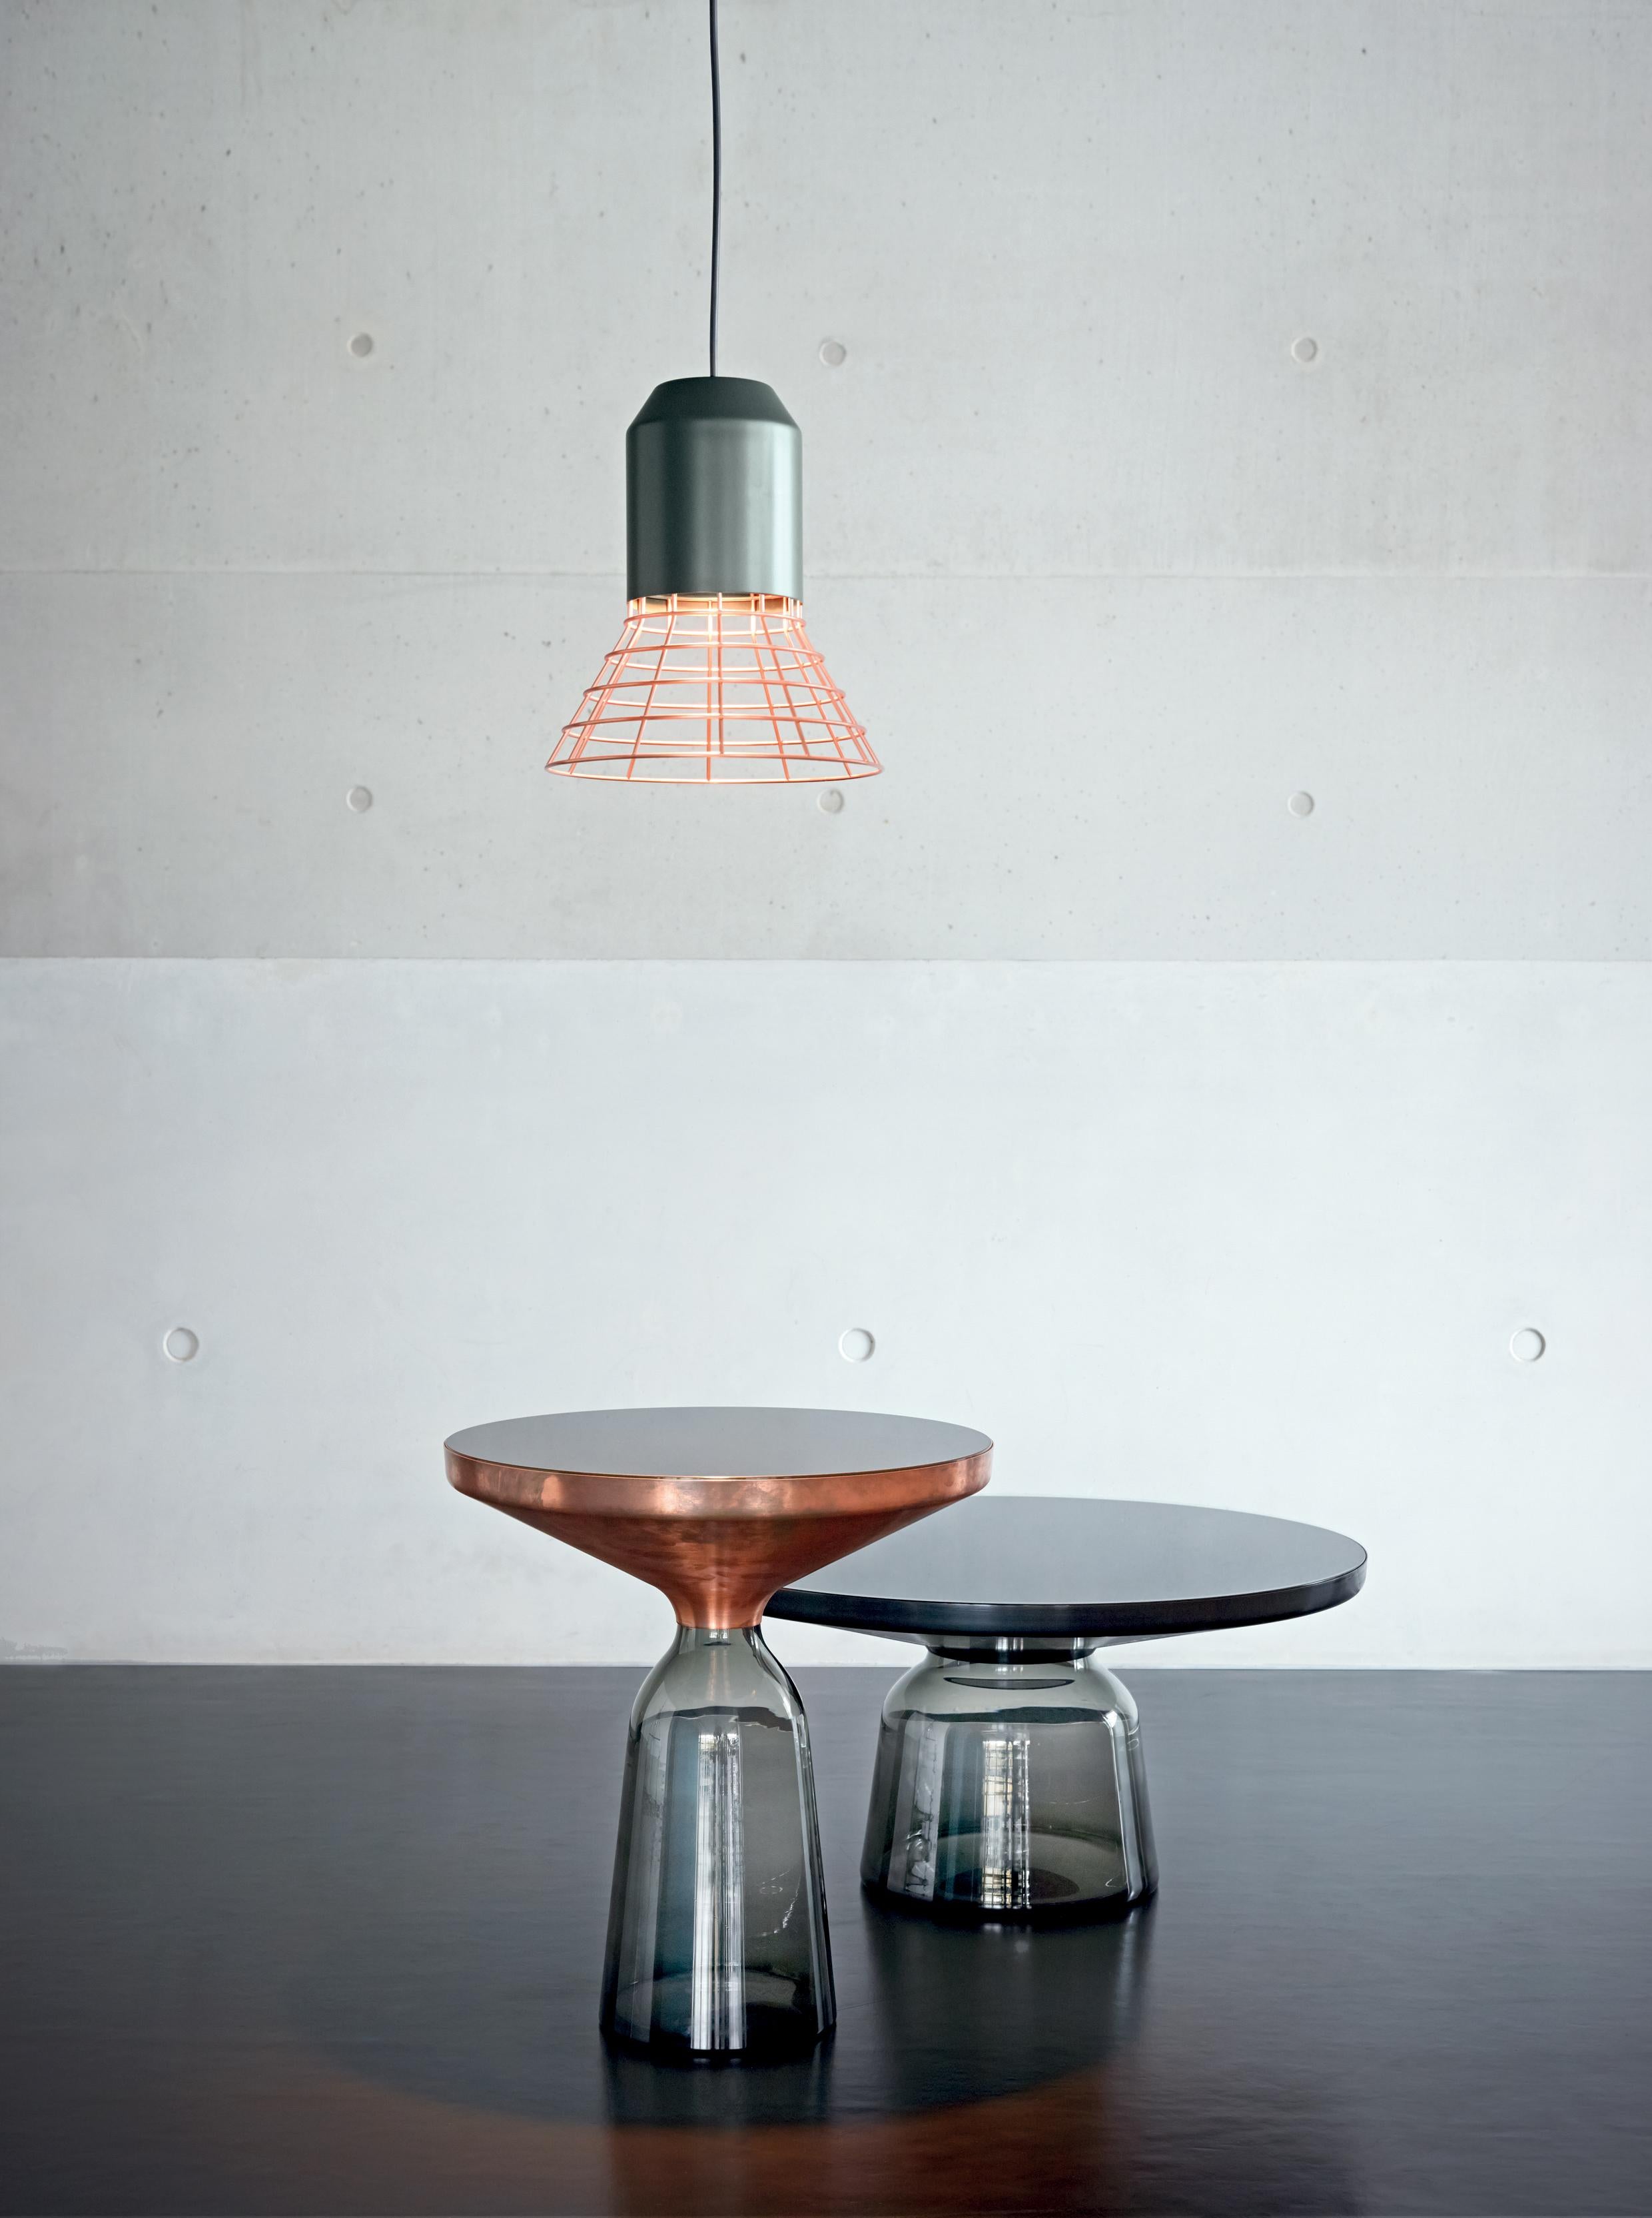 German ClassiCon Bell Light Pendant Lamp in Grey Copper Cage by Sebastian Herkner